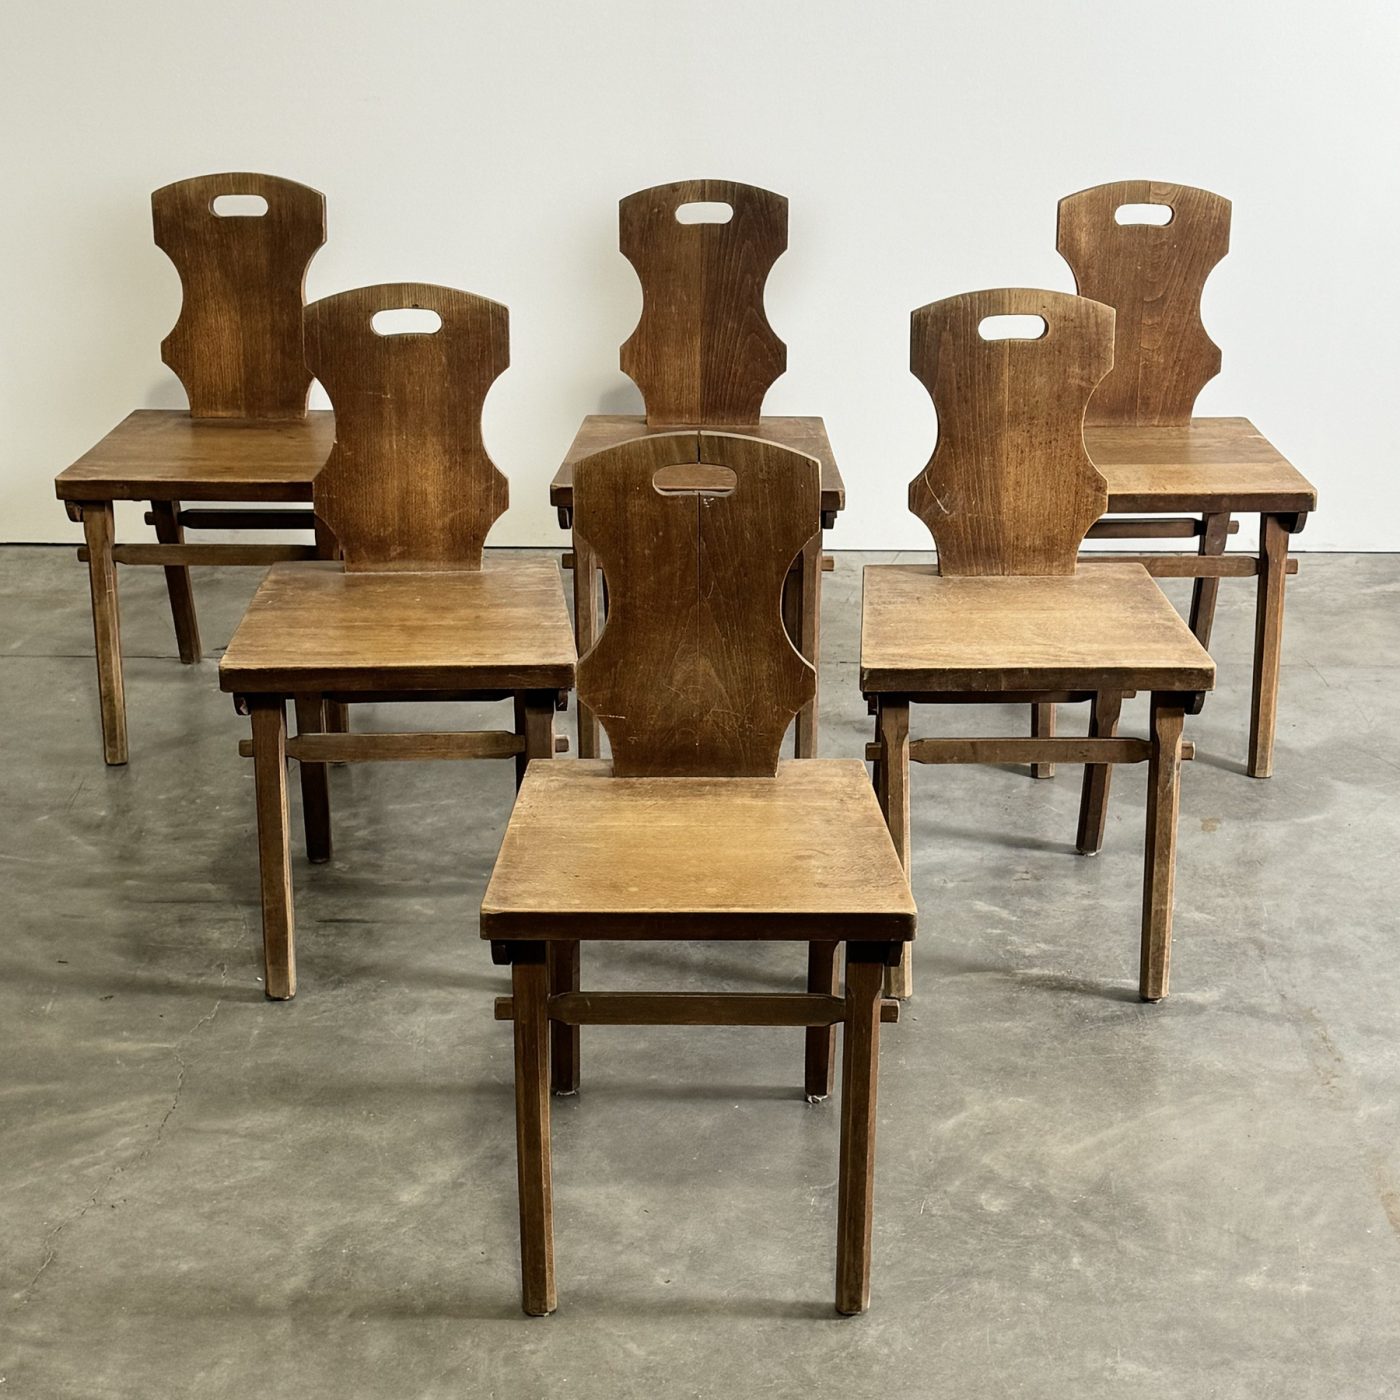 objet-vagabond-rustic-chairs0000